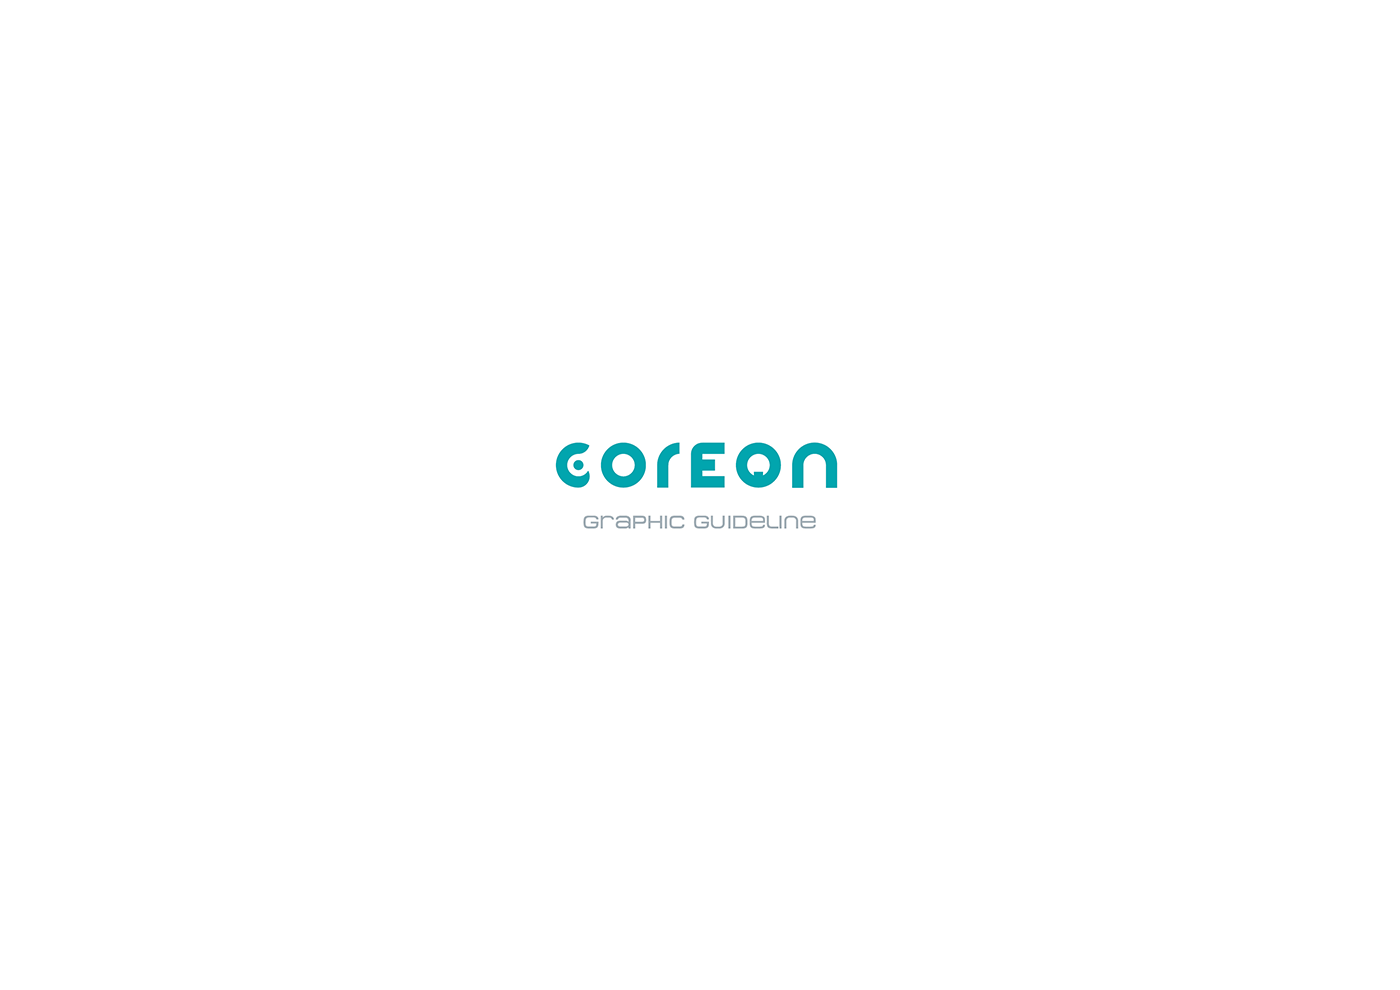 coreon brand identity Project new top company